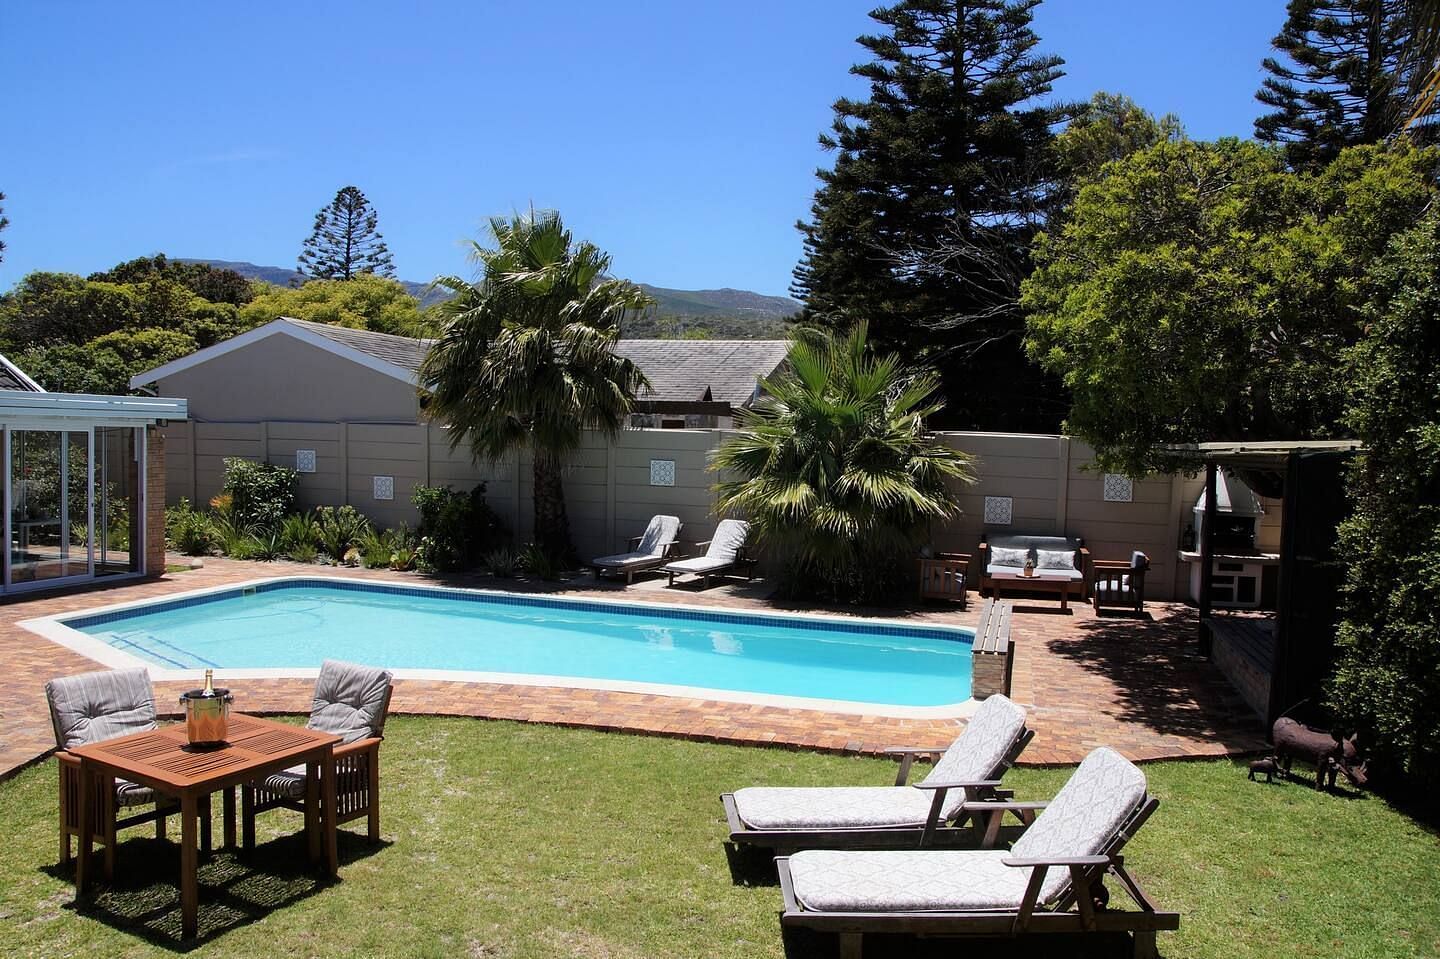 JWguest Residential Home at Cape Town, Western Cape | Wonderful Studio Apartment between 2 Oceans #2 | Jwbnb no brobnb 21